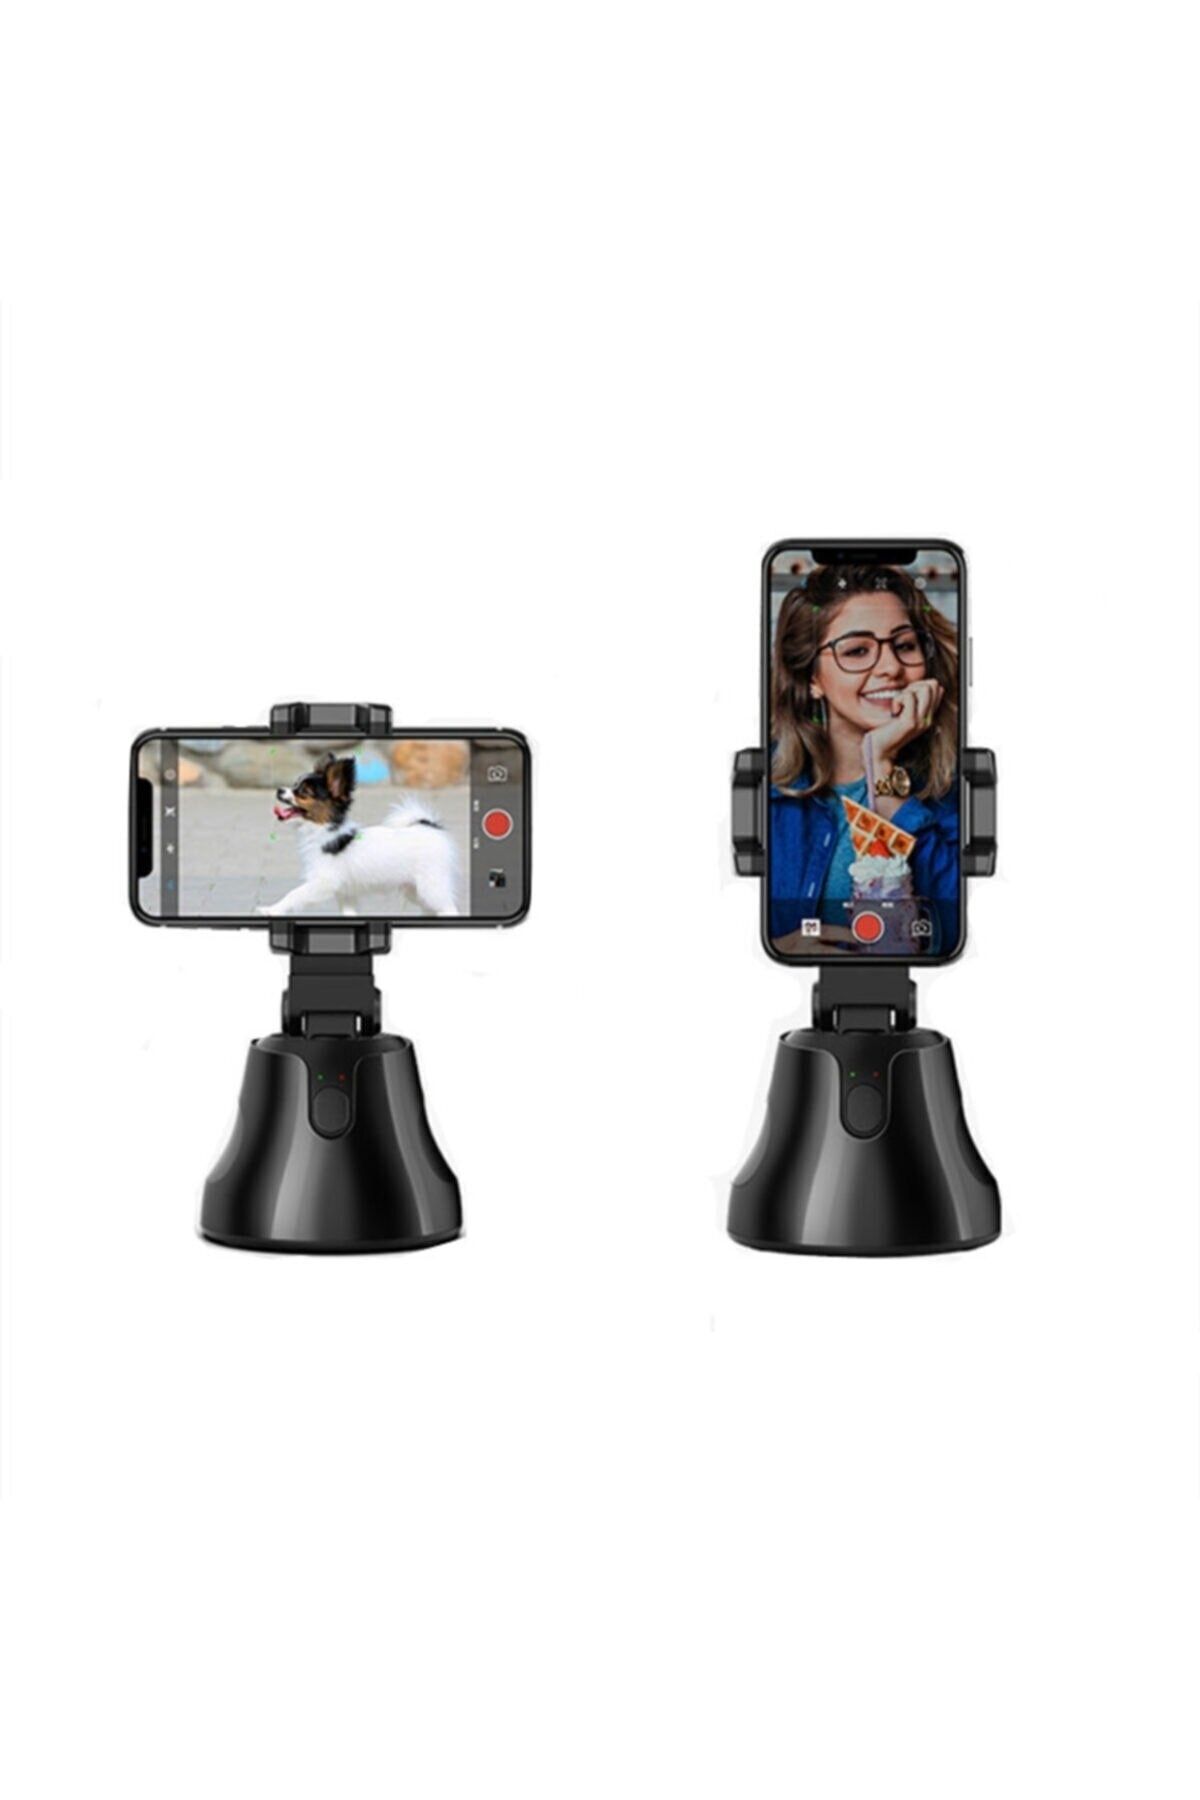 VOOKA Apai Genie Unico 360° Hareket Algılayıcı Akıllı Selfie Video Takip Tripodu Sensörlü